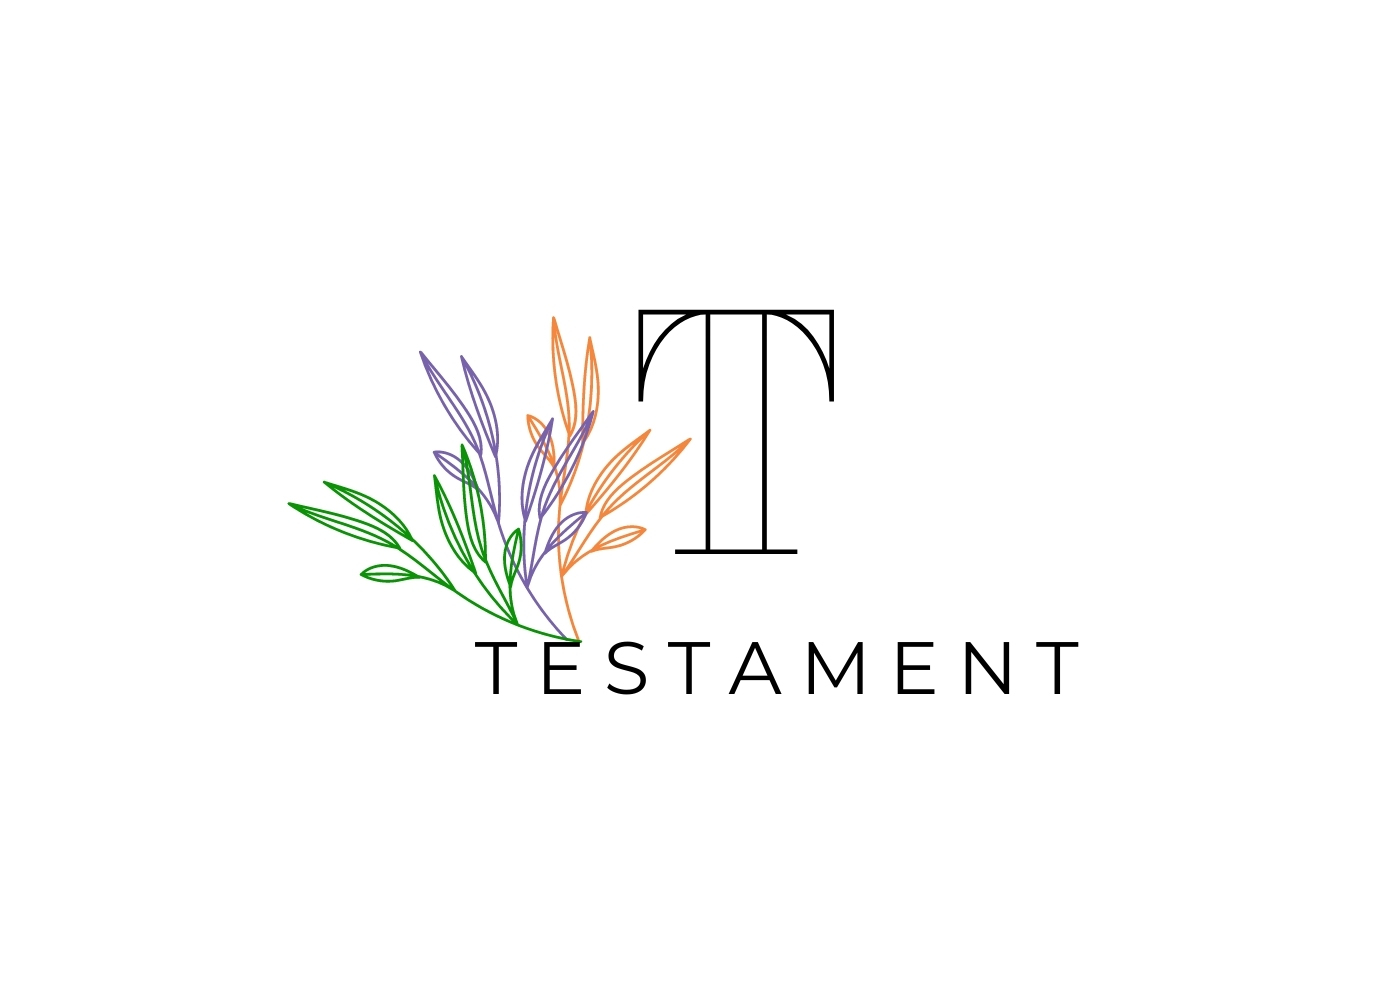 Testament logo.jpg